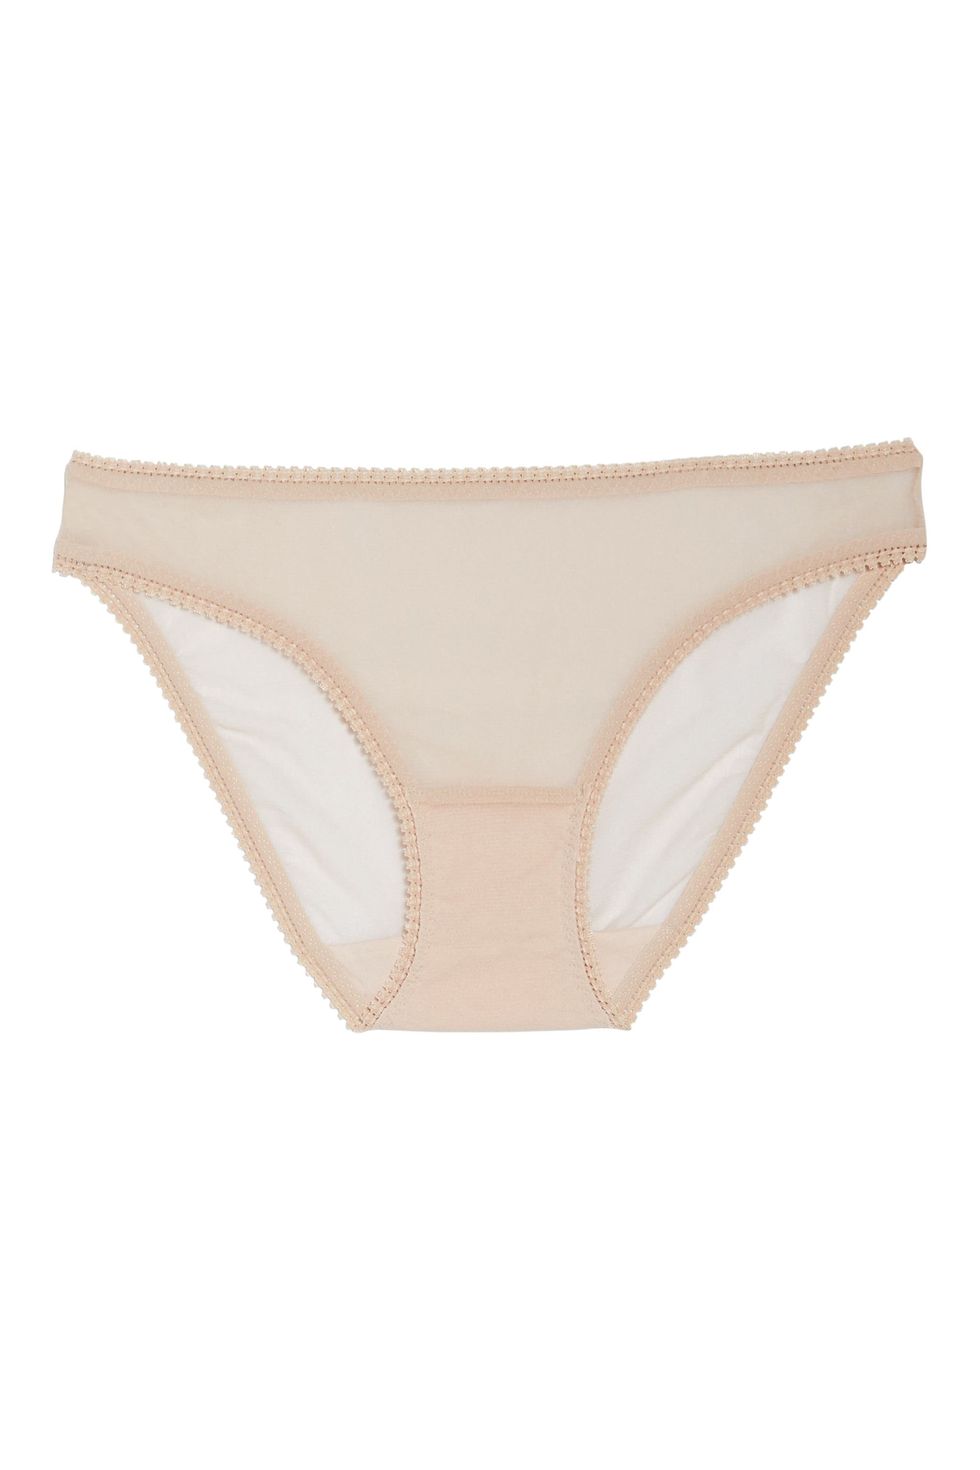 4pack Women's Crotchless Panties T-back Underwear String Thongs Lingerie